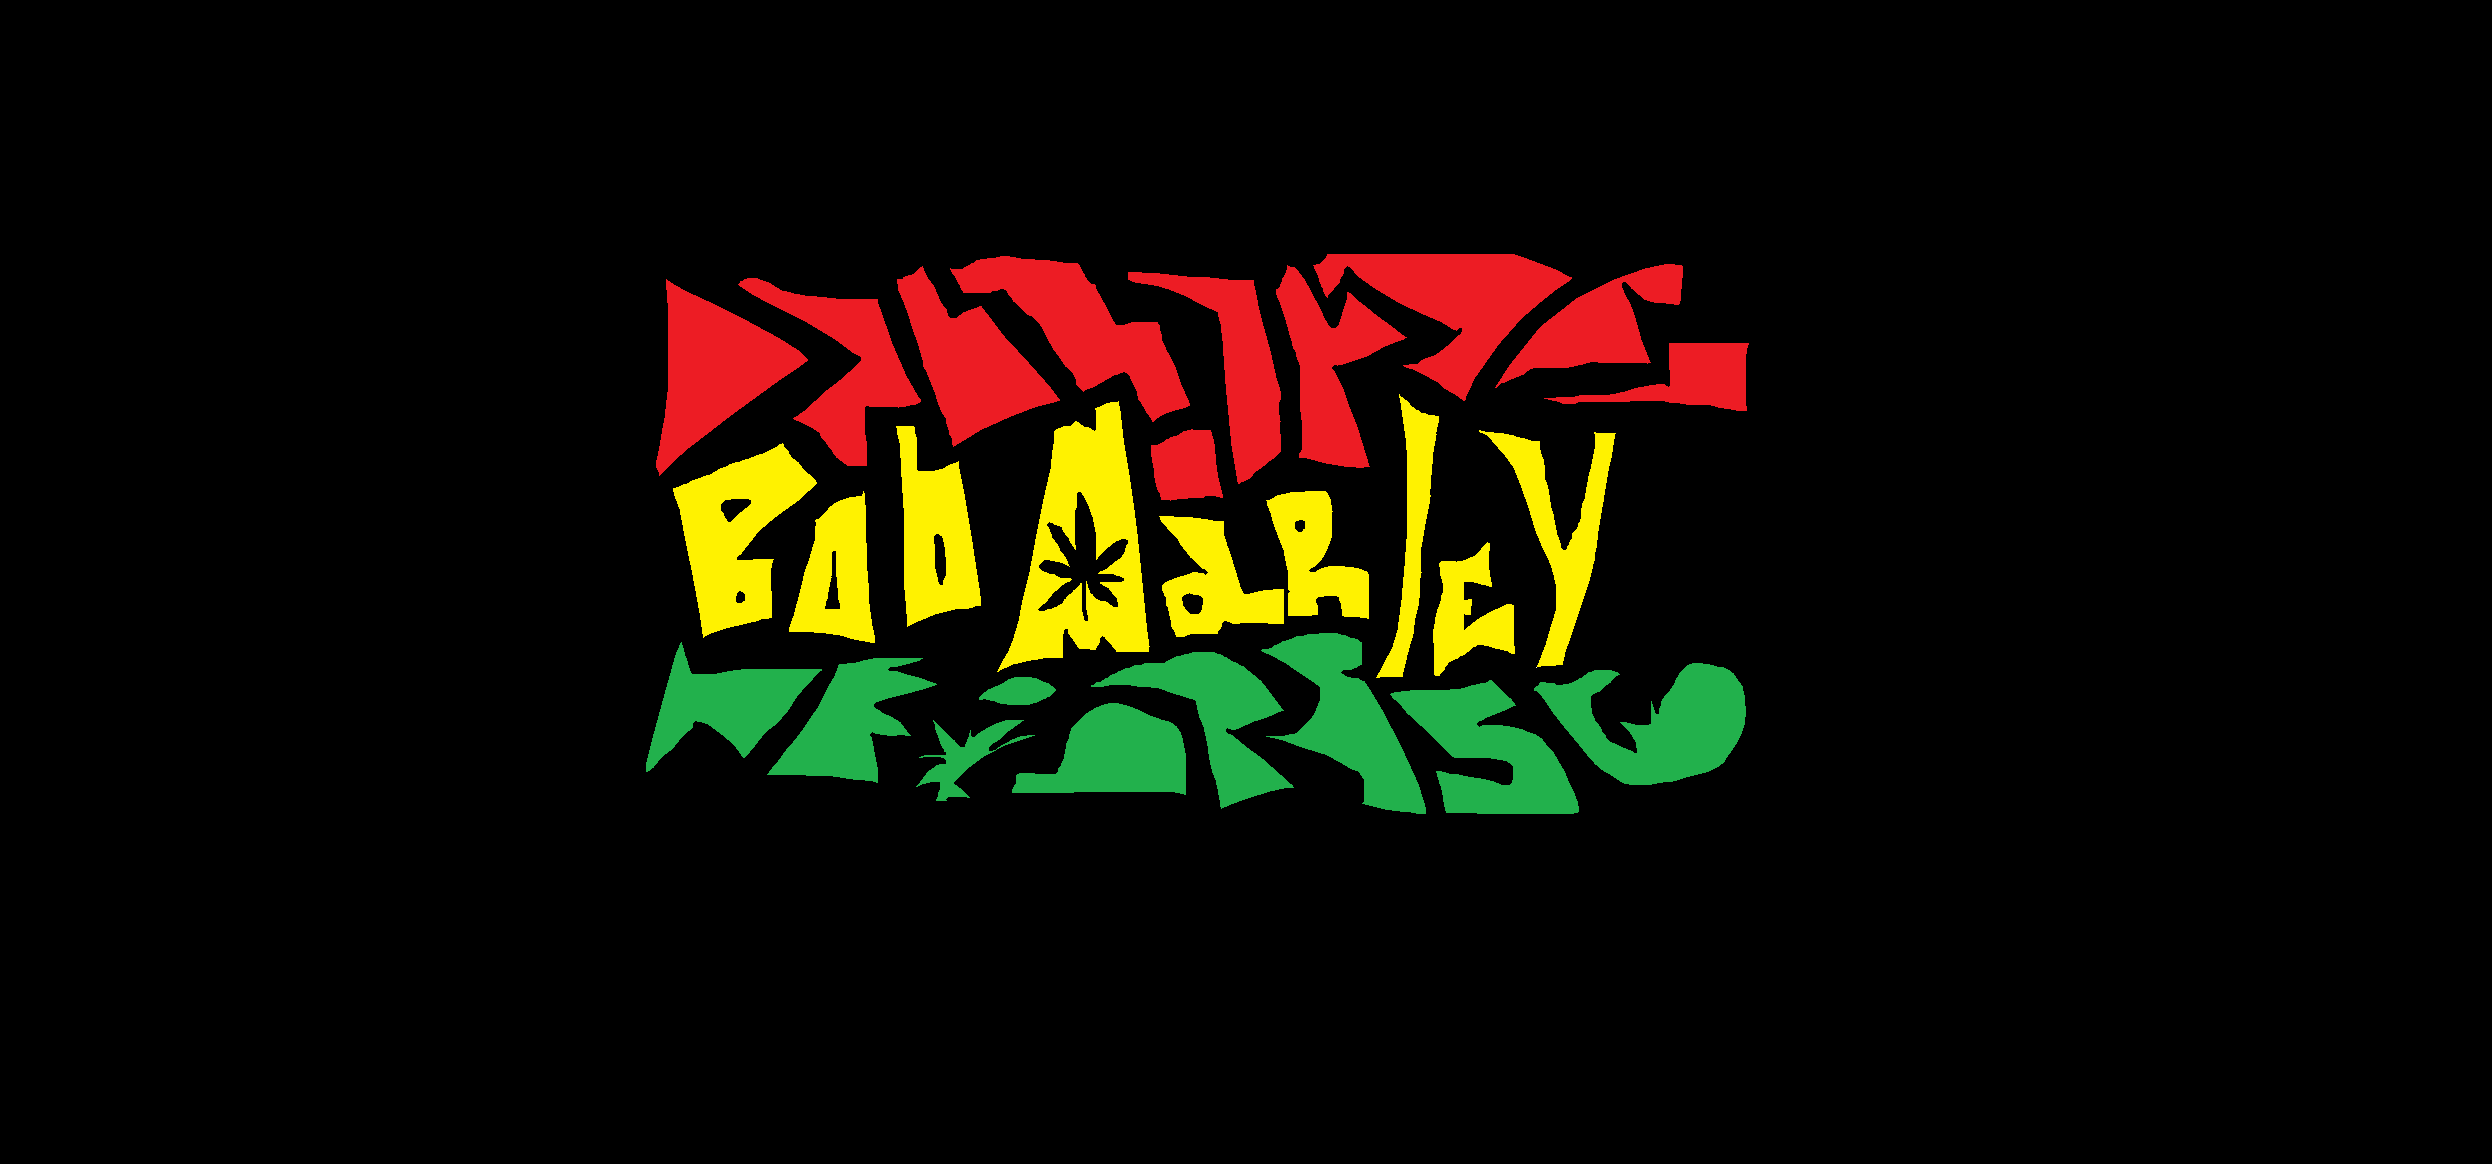 paint, marijuana, Bob Marley - desktop wallpaper